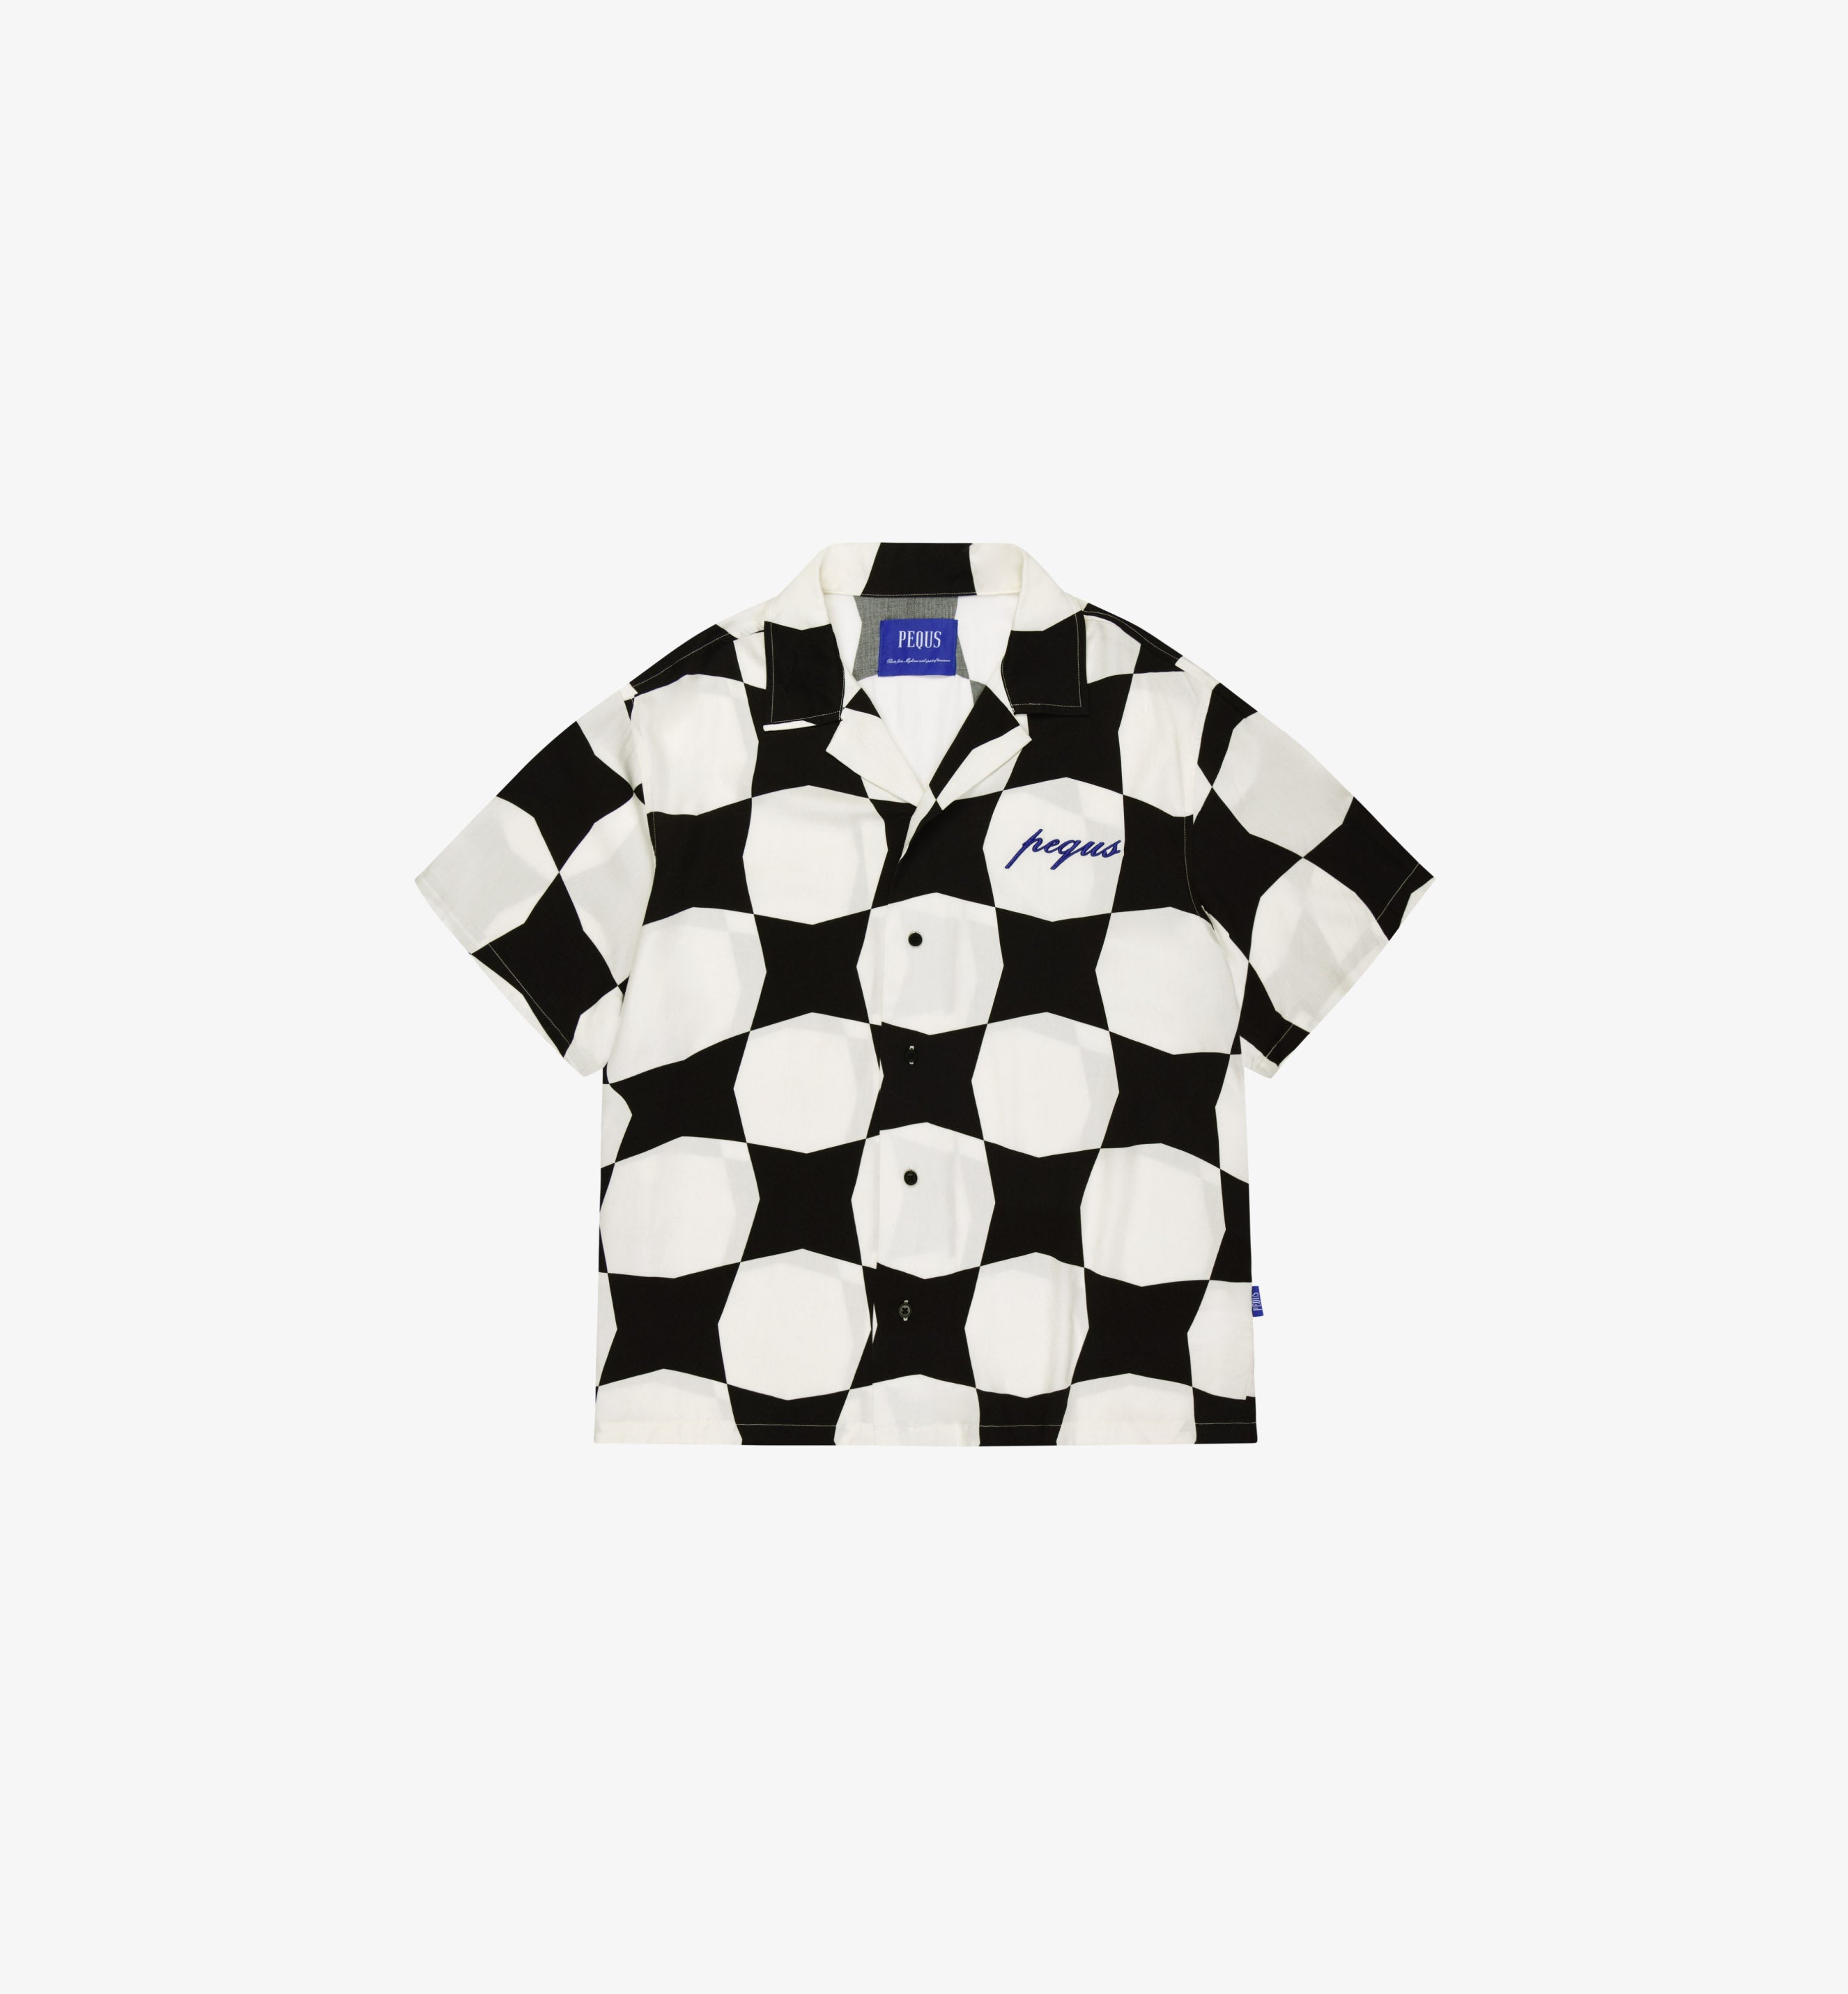 ílios Checkerboard Summer Shirt